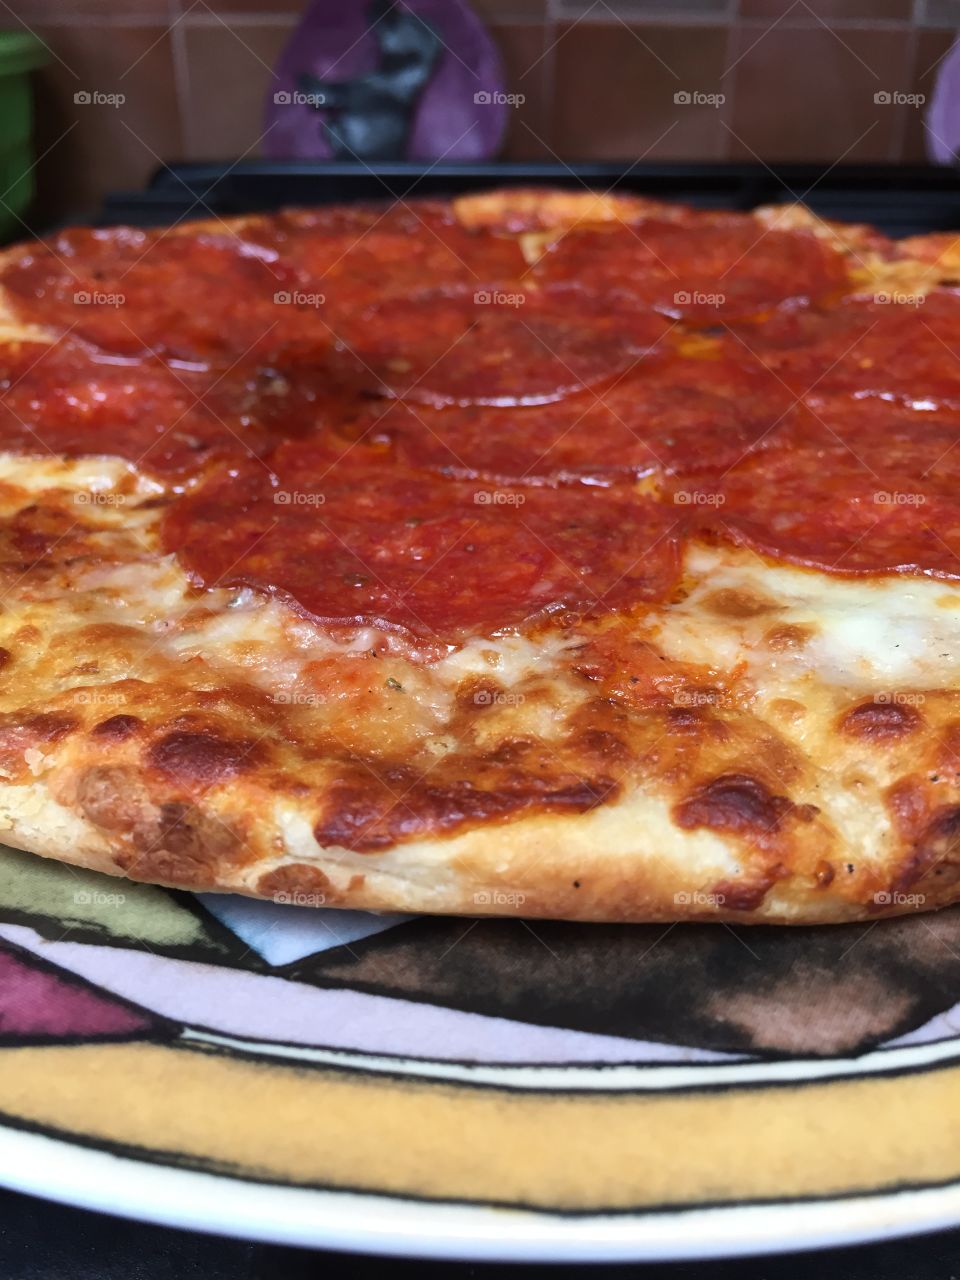 Up close pizza 